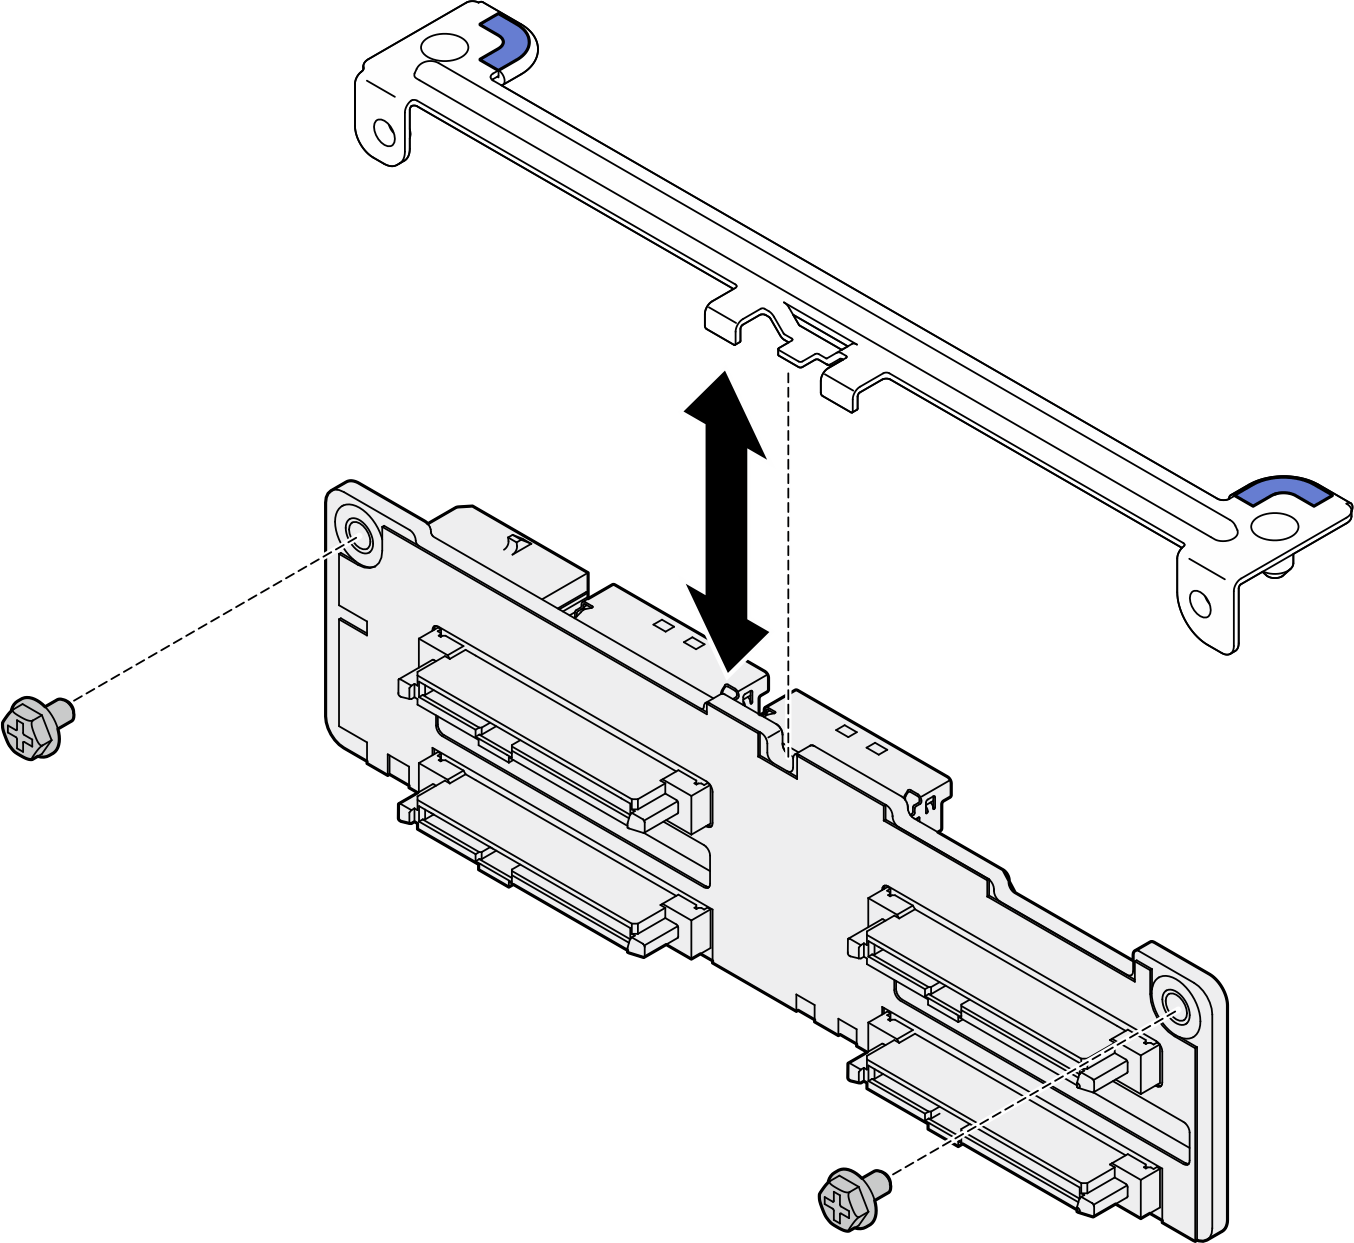 2.5-inch drive backplane bracket installation